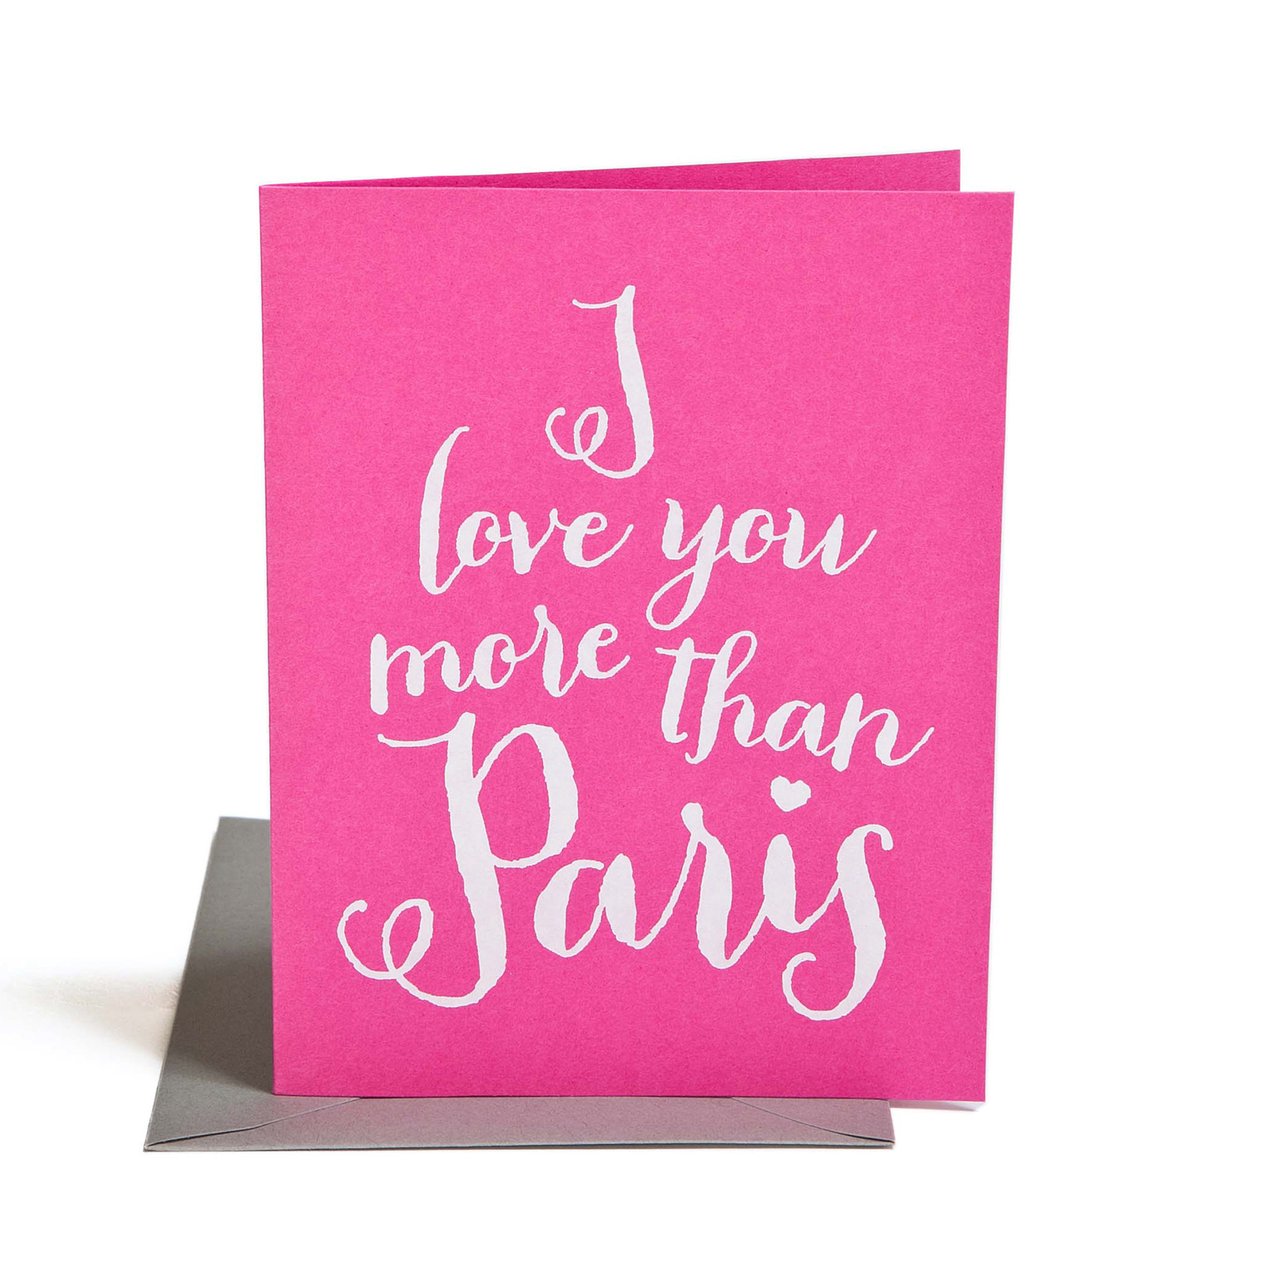 Paris Card